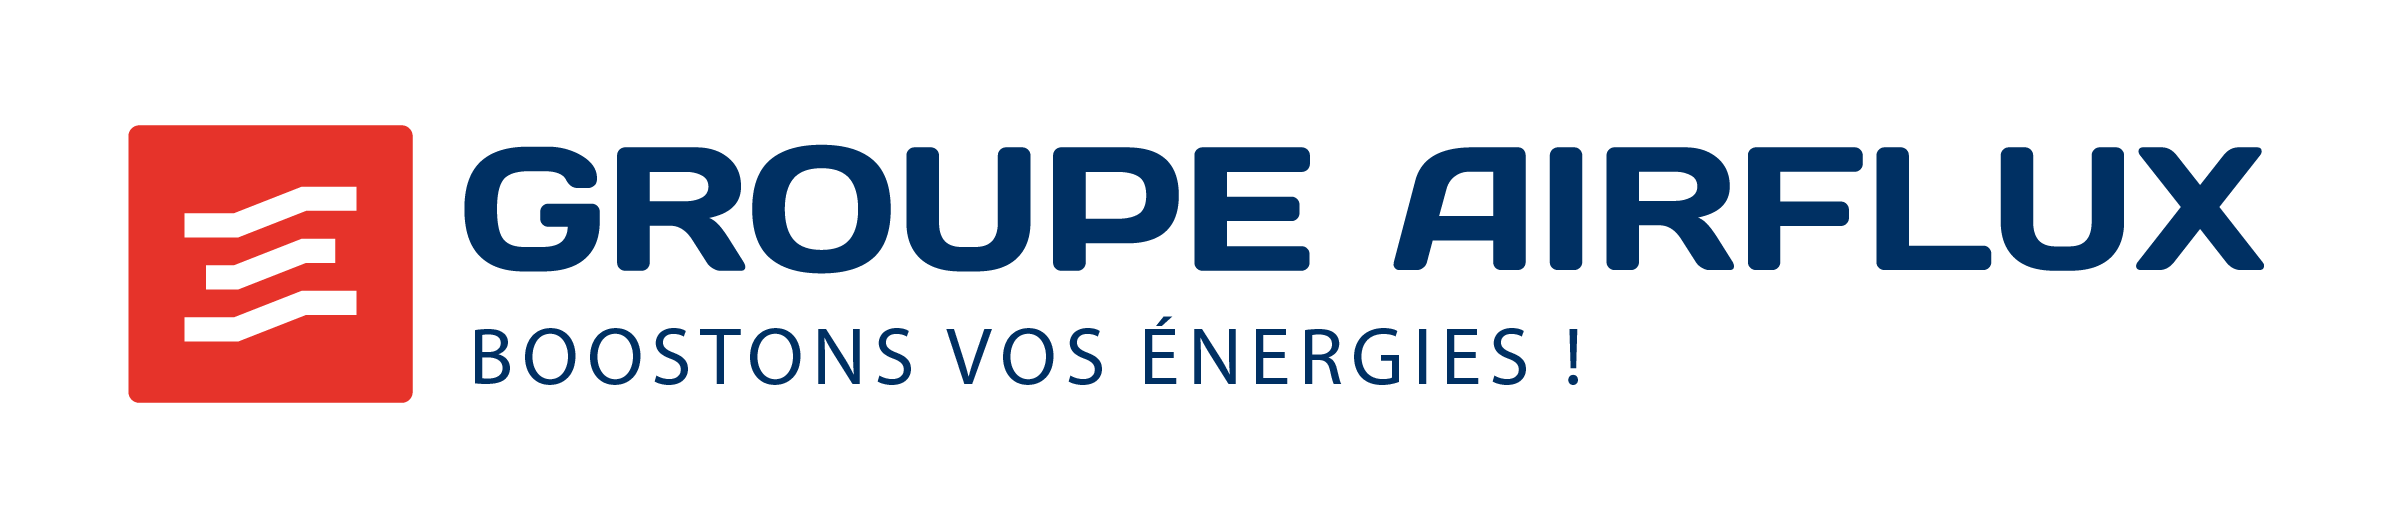 Group Airflux - Boostons vos énergies